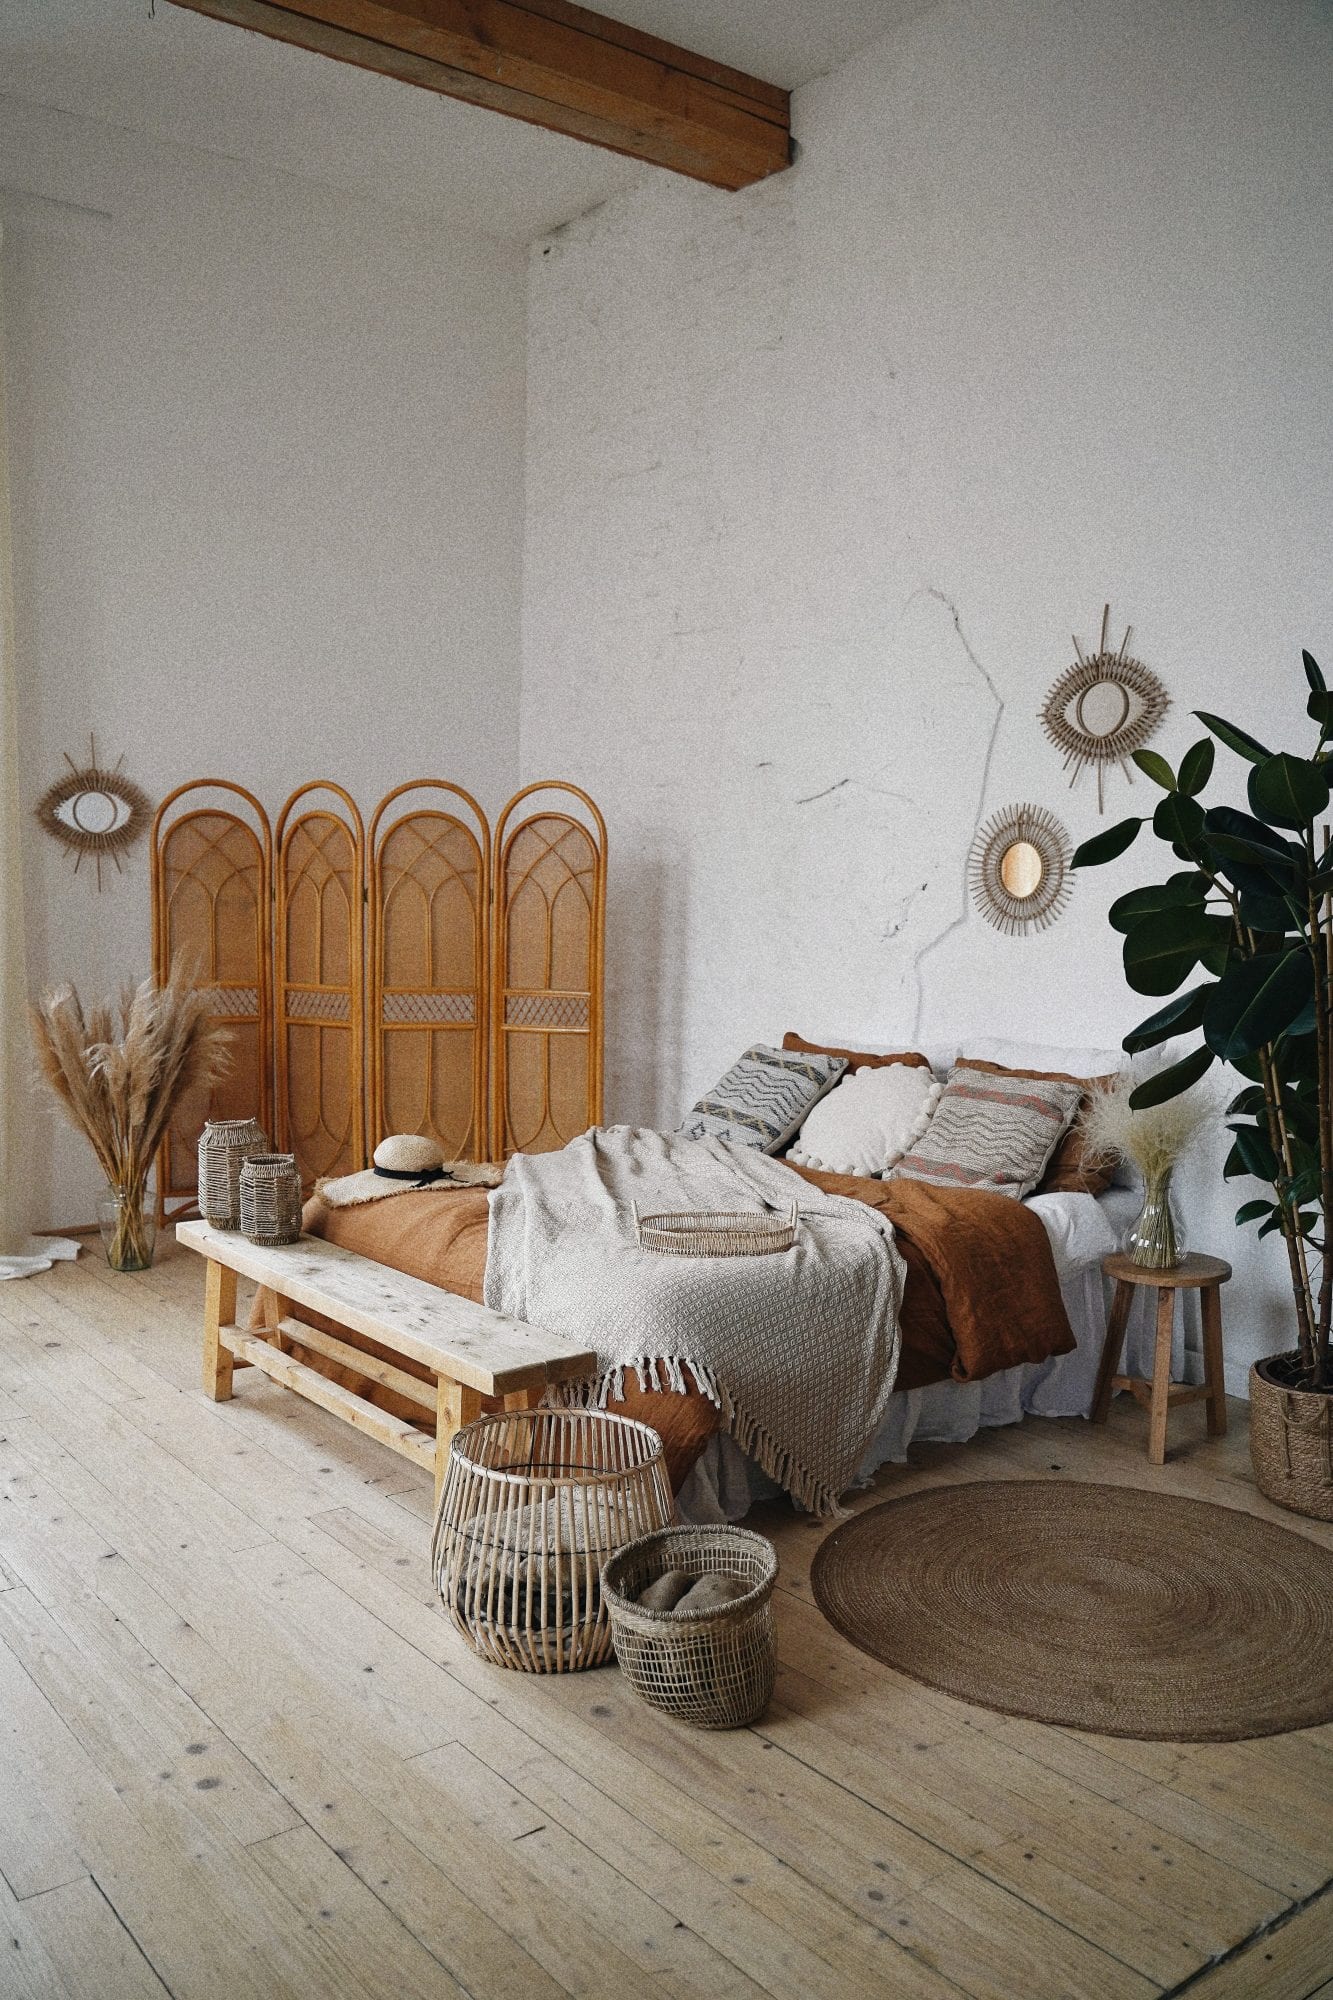 4 Easy Bedroom Decor Ideas for 2020